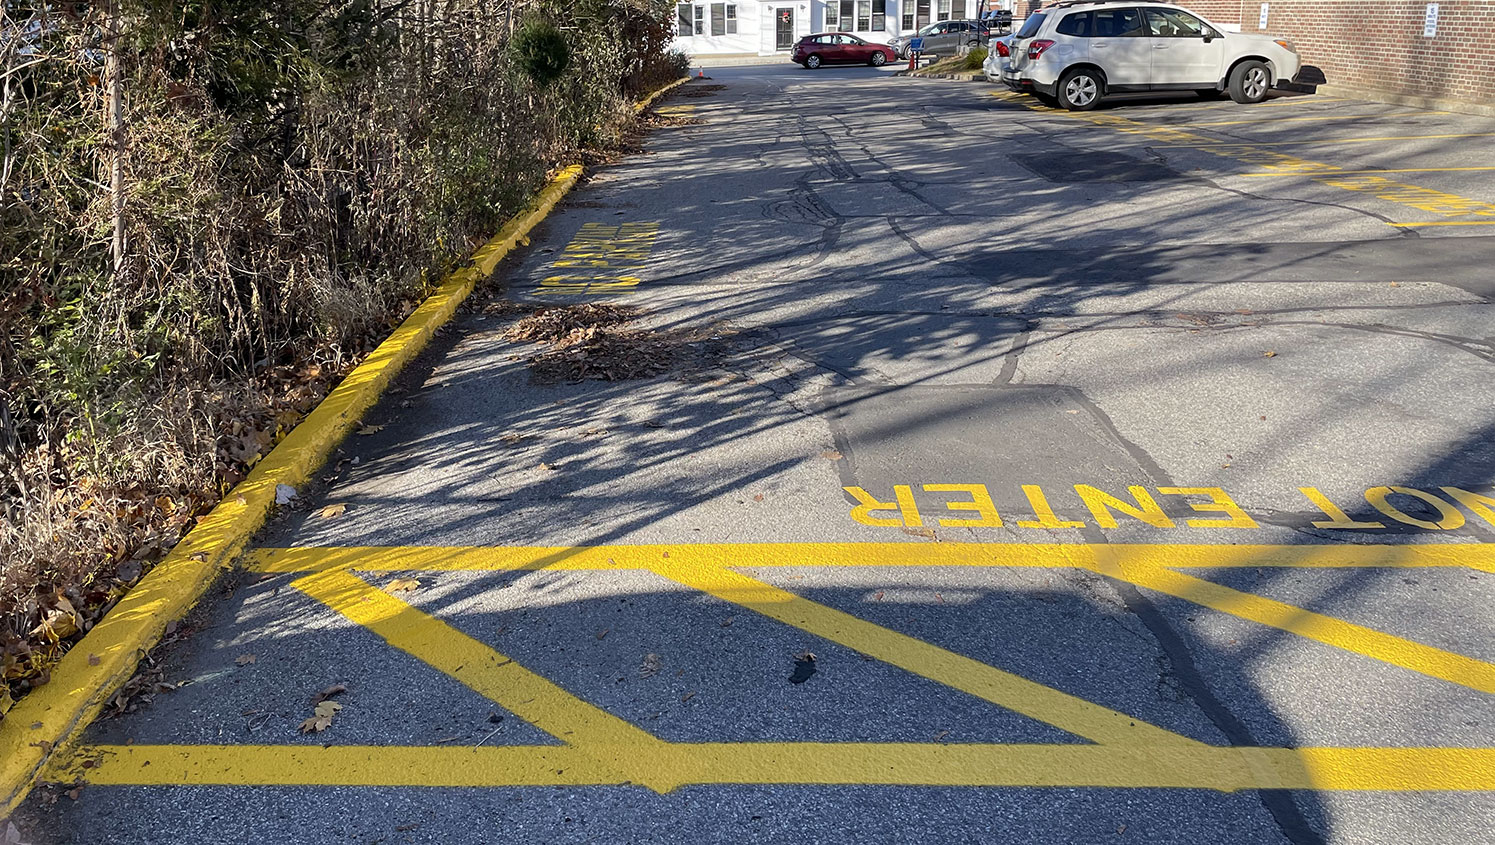 do not enter’ parking lot markings